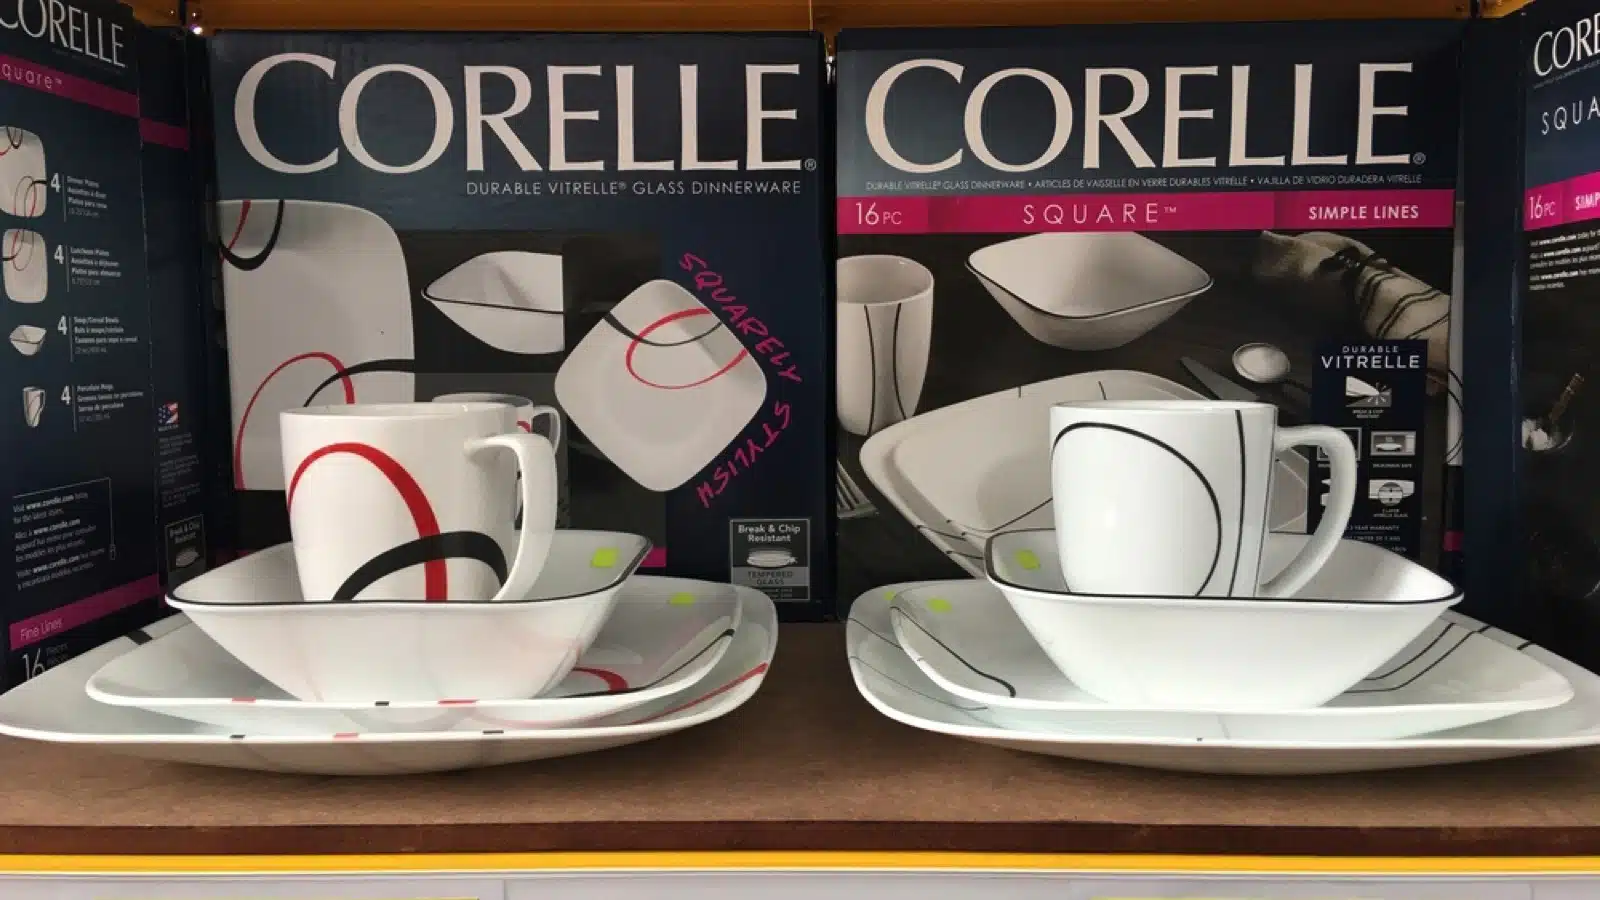 Corelle Dinnerware